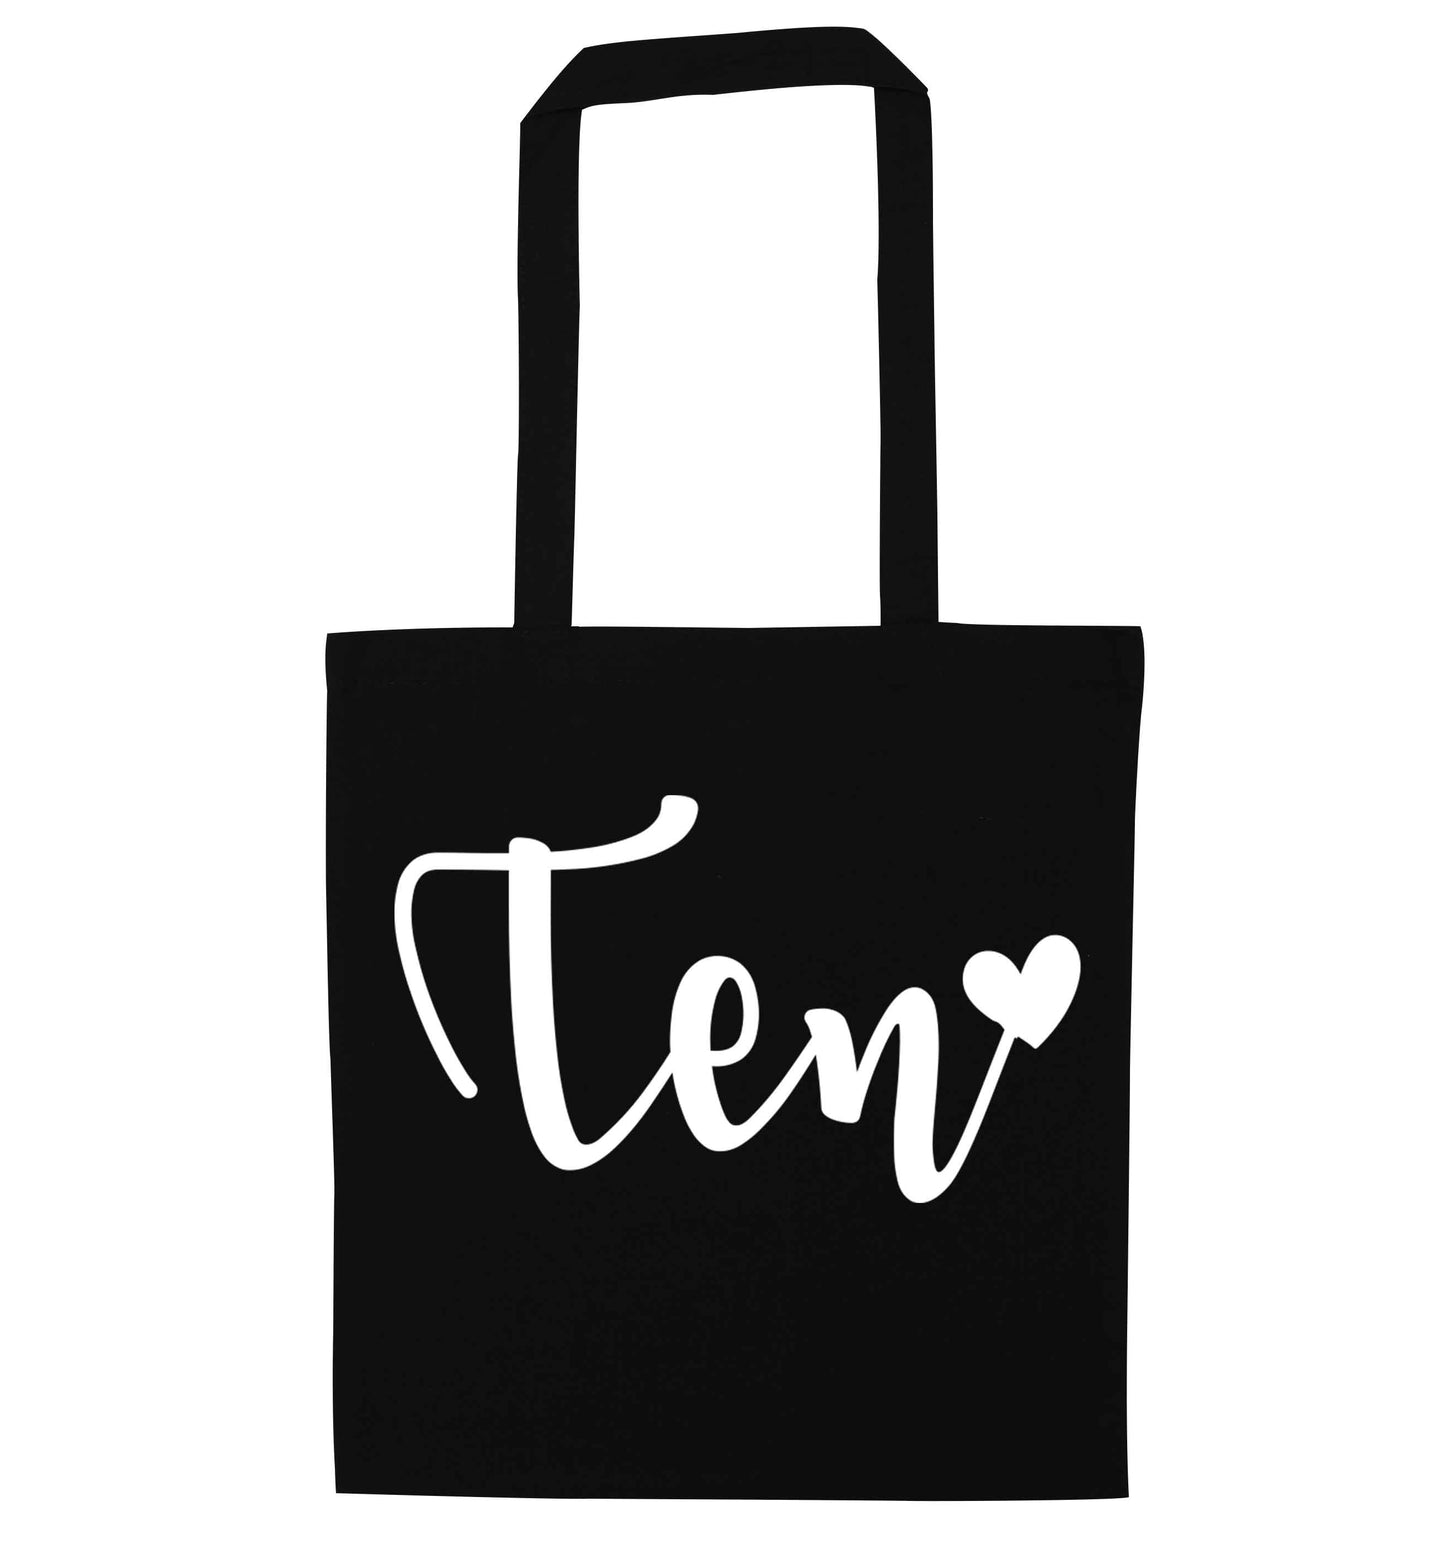 Ten and heart black tote bag